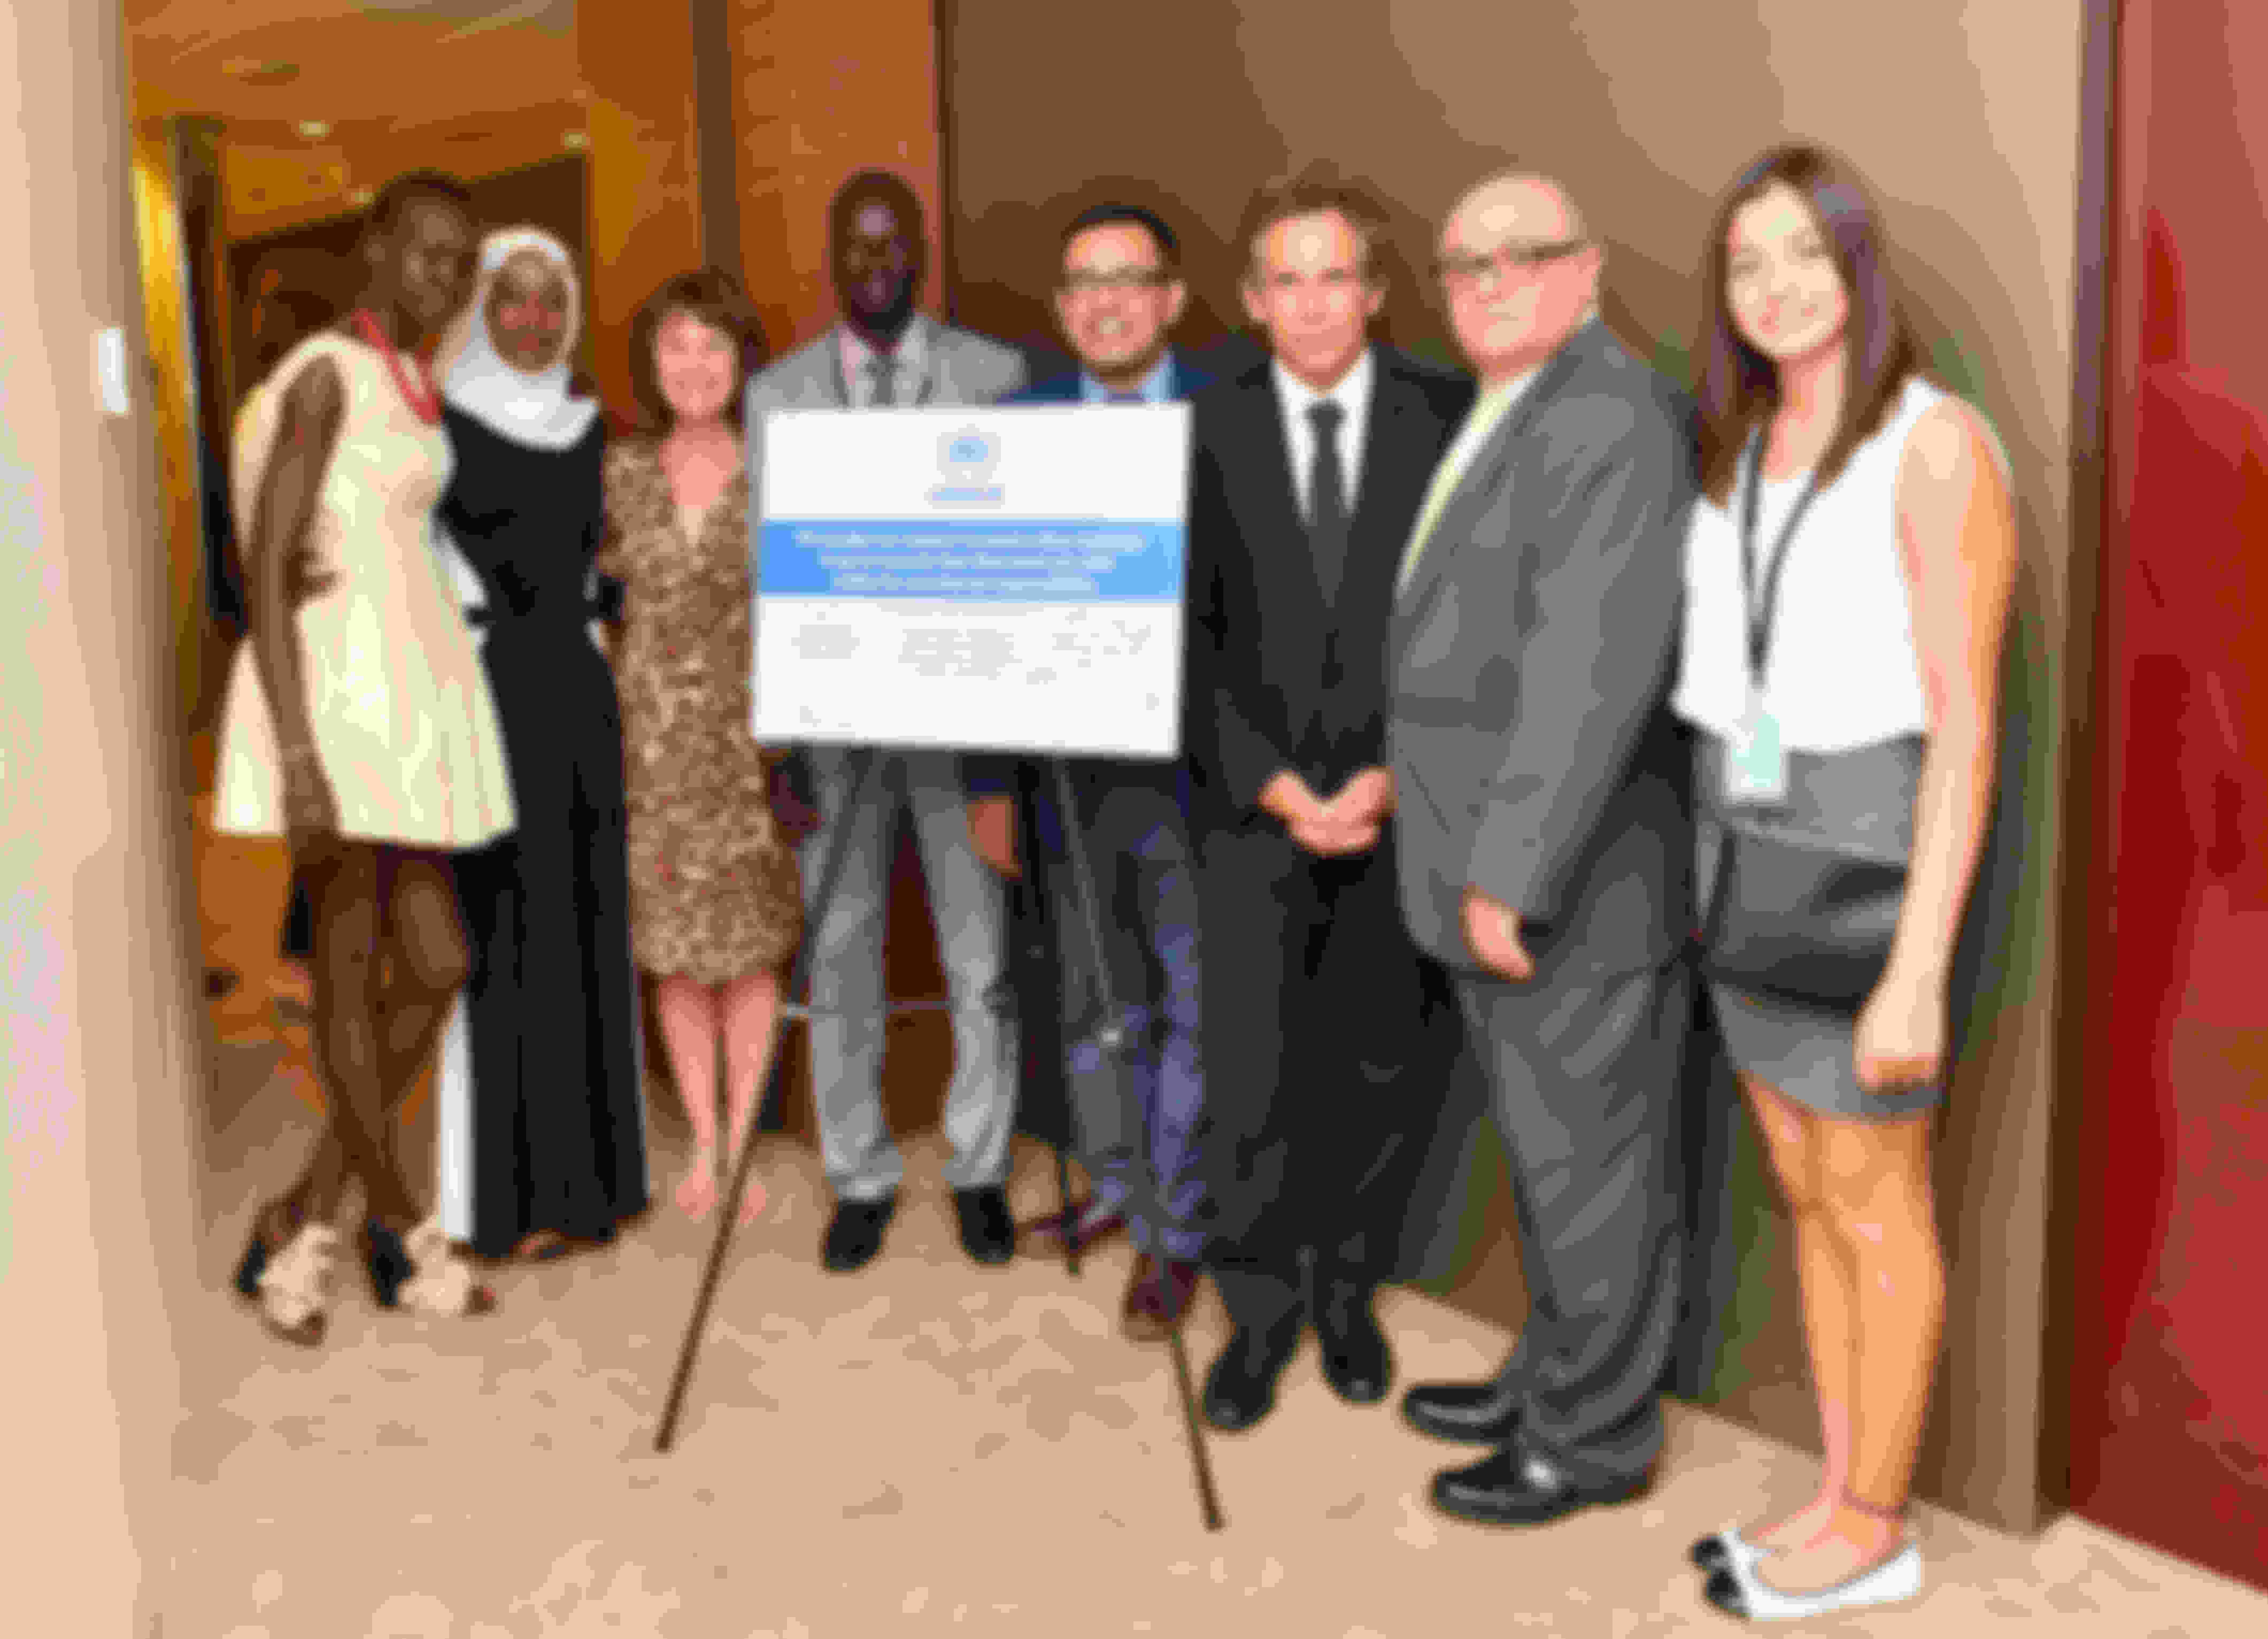 (L-R) Alek Wek, Emi Mahmoud, Ninette Kelly, Yiech Pur Biel, Tika Acharya, Ben Stiller, Esmail Dezhbod, and Yusra Mardini attend the 2016 UNHCR #WithRefugees petition handover at UN General Assembly Hall in New York City.